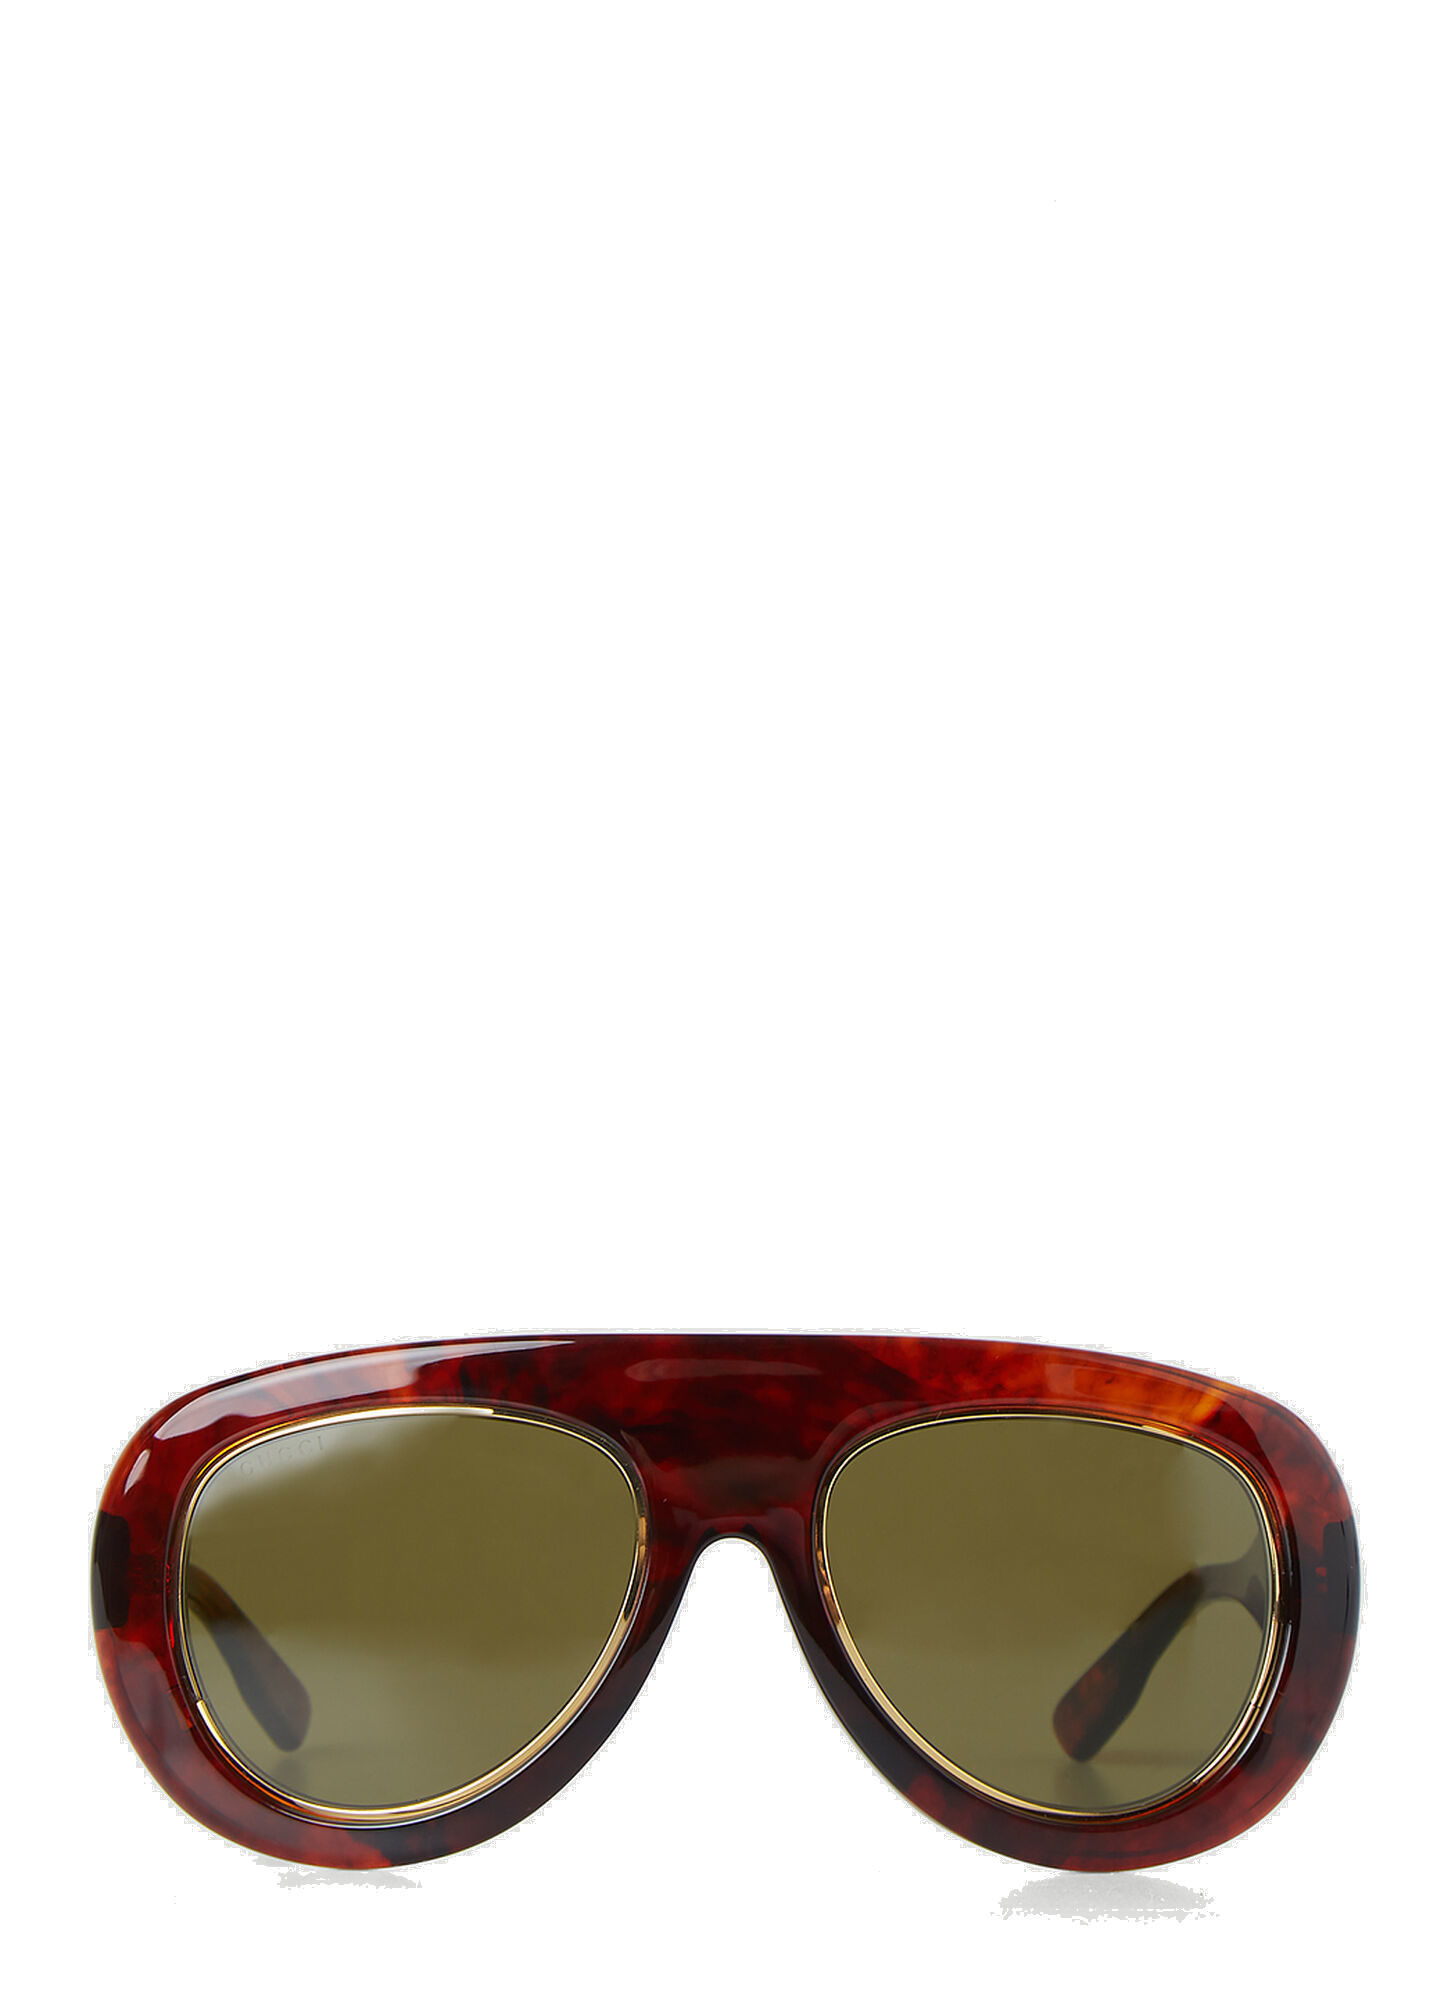 Navigator Frame Tortoiseshell Sunglasses In Brown Gucci